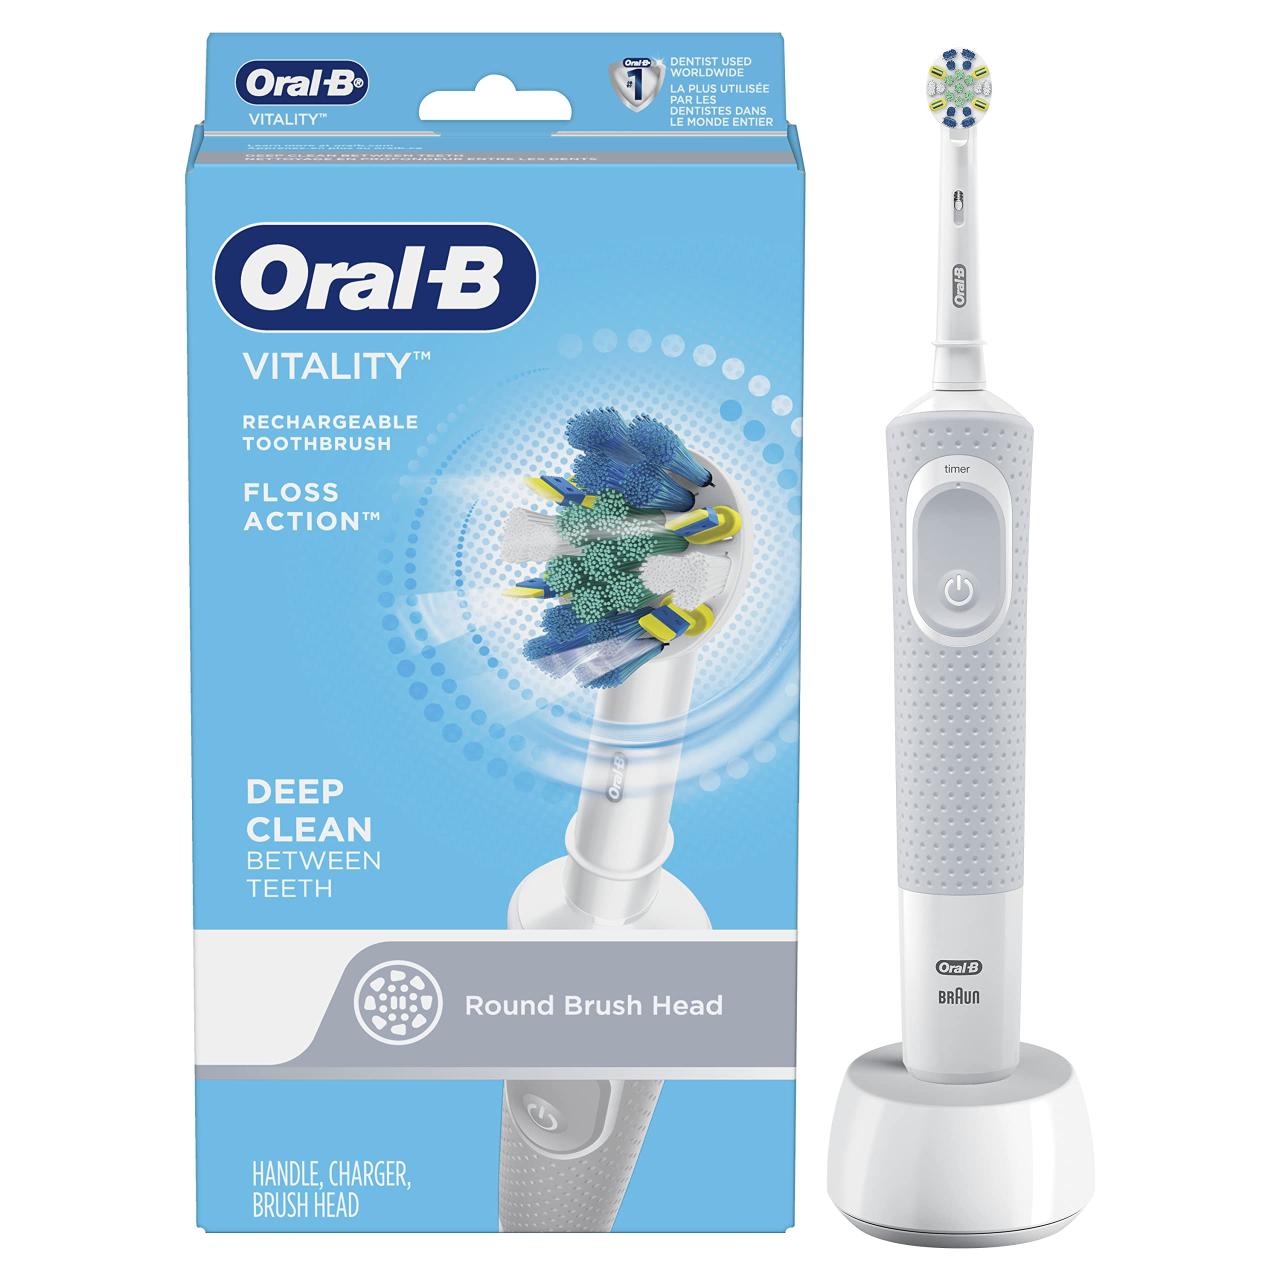 Oral b electric toothbrush reviews